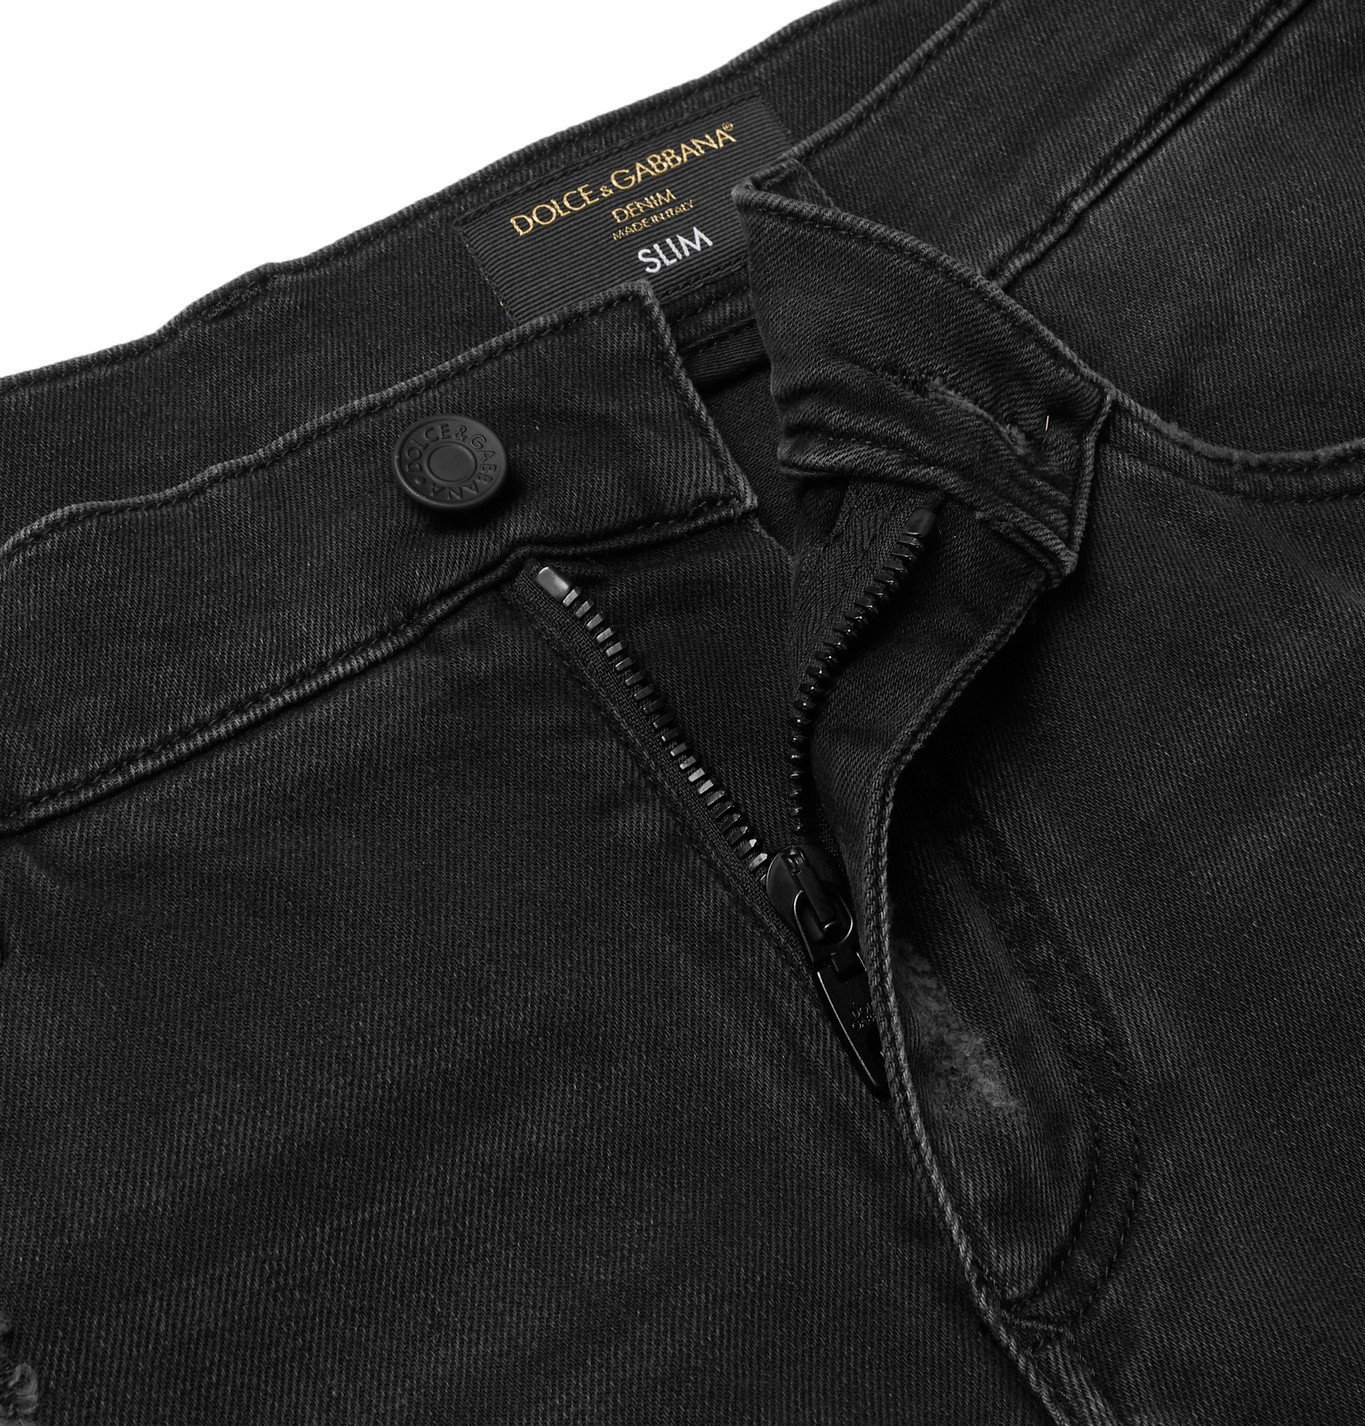 Dolce & Gabbana - Paint-Splattered Distressed Stretch-Denim Jeans - Black  Dolce & Gabbana